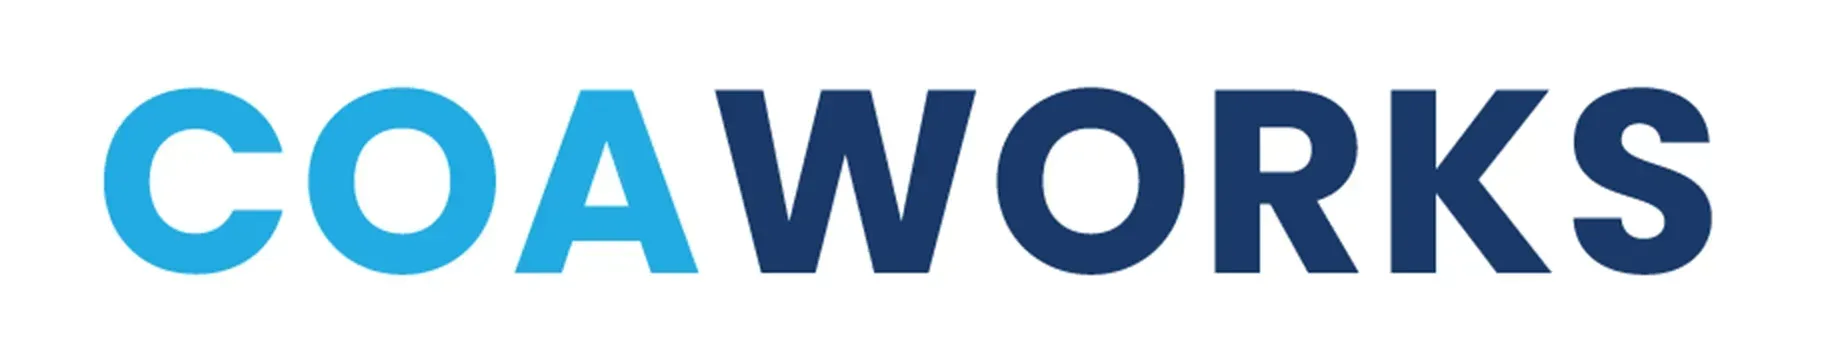 Coaworks Logo